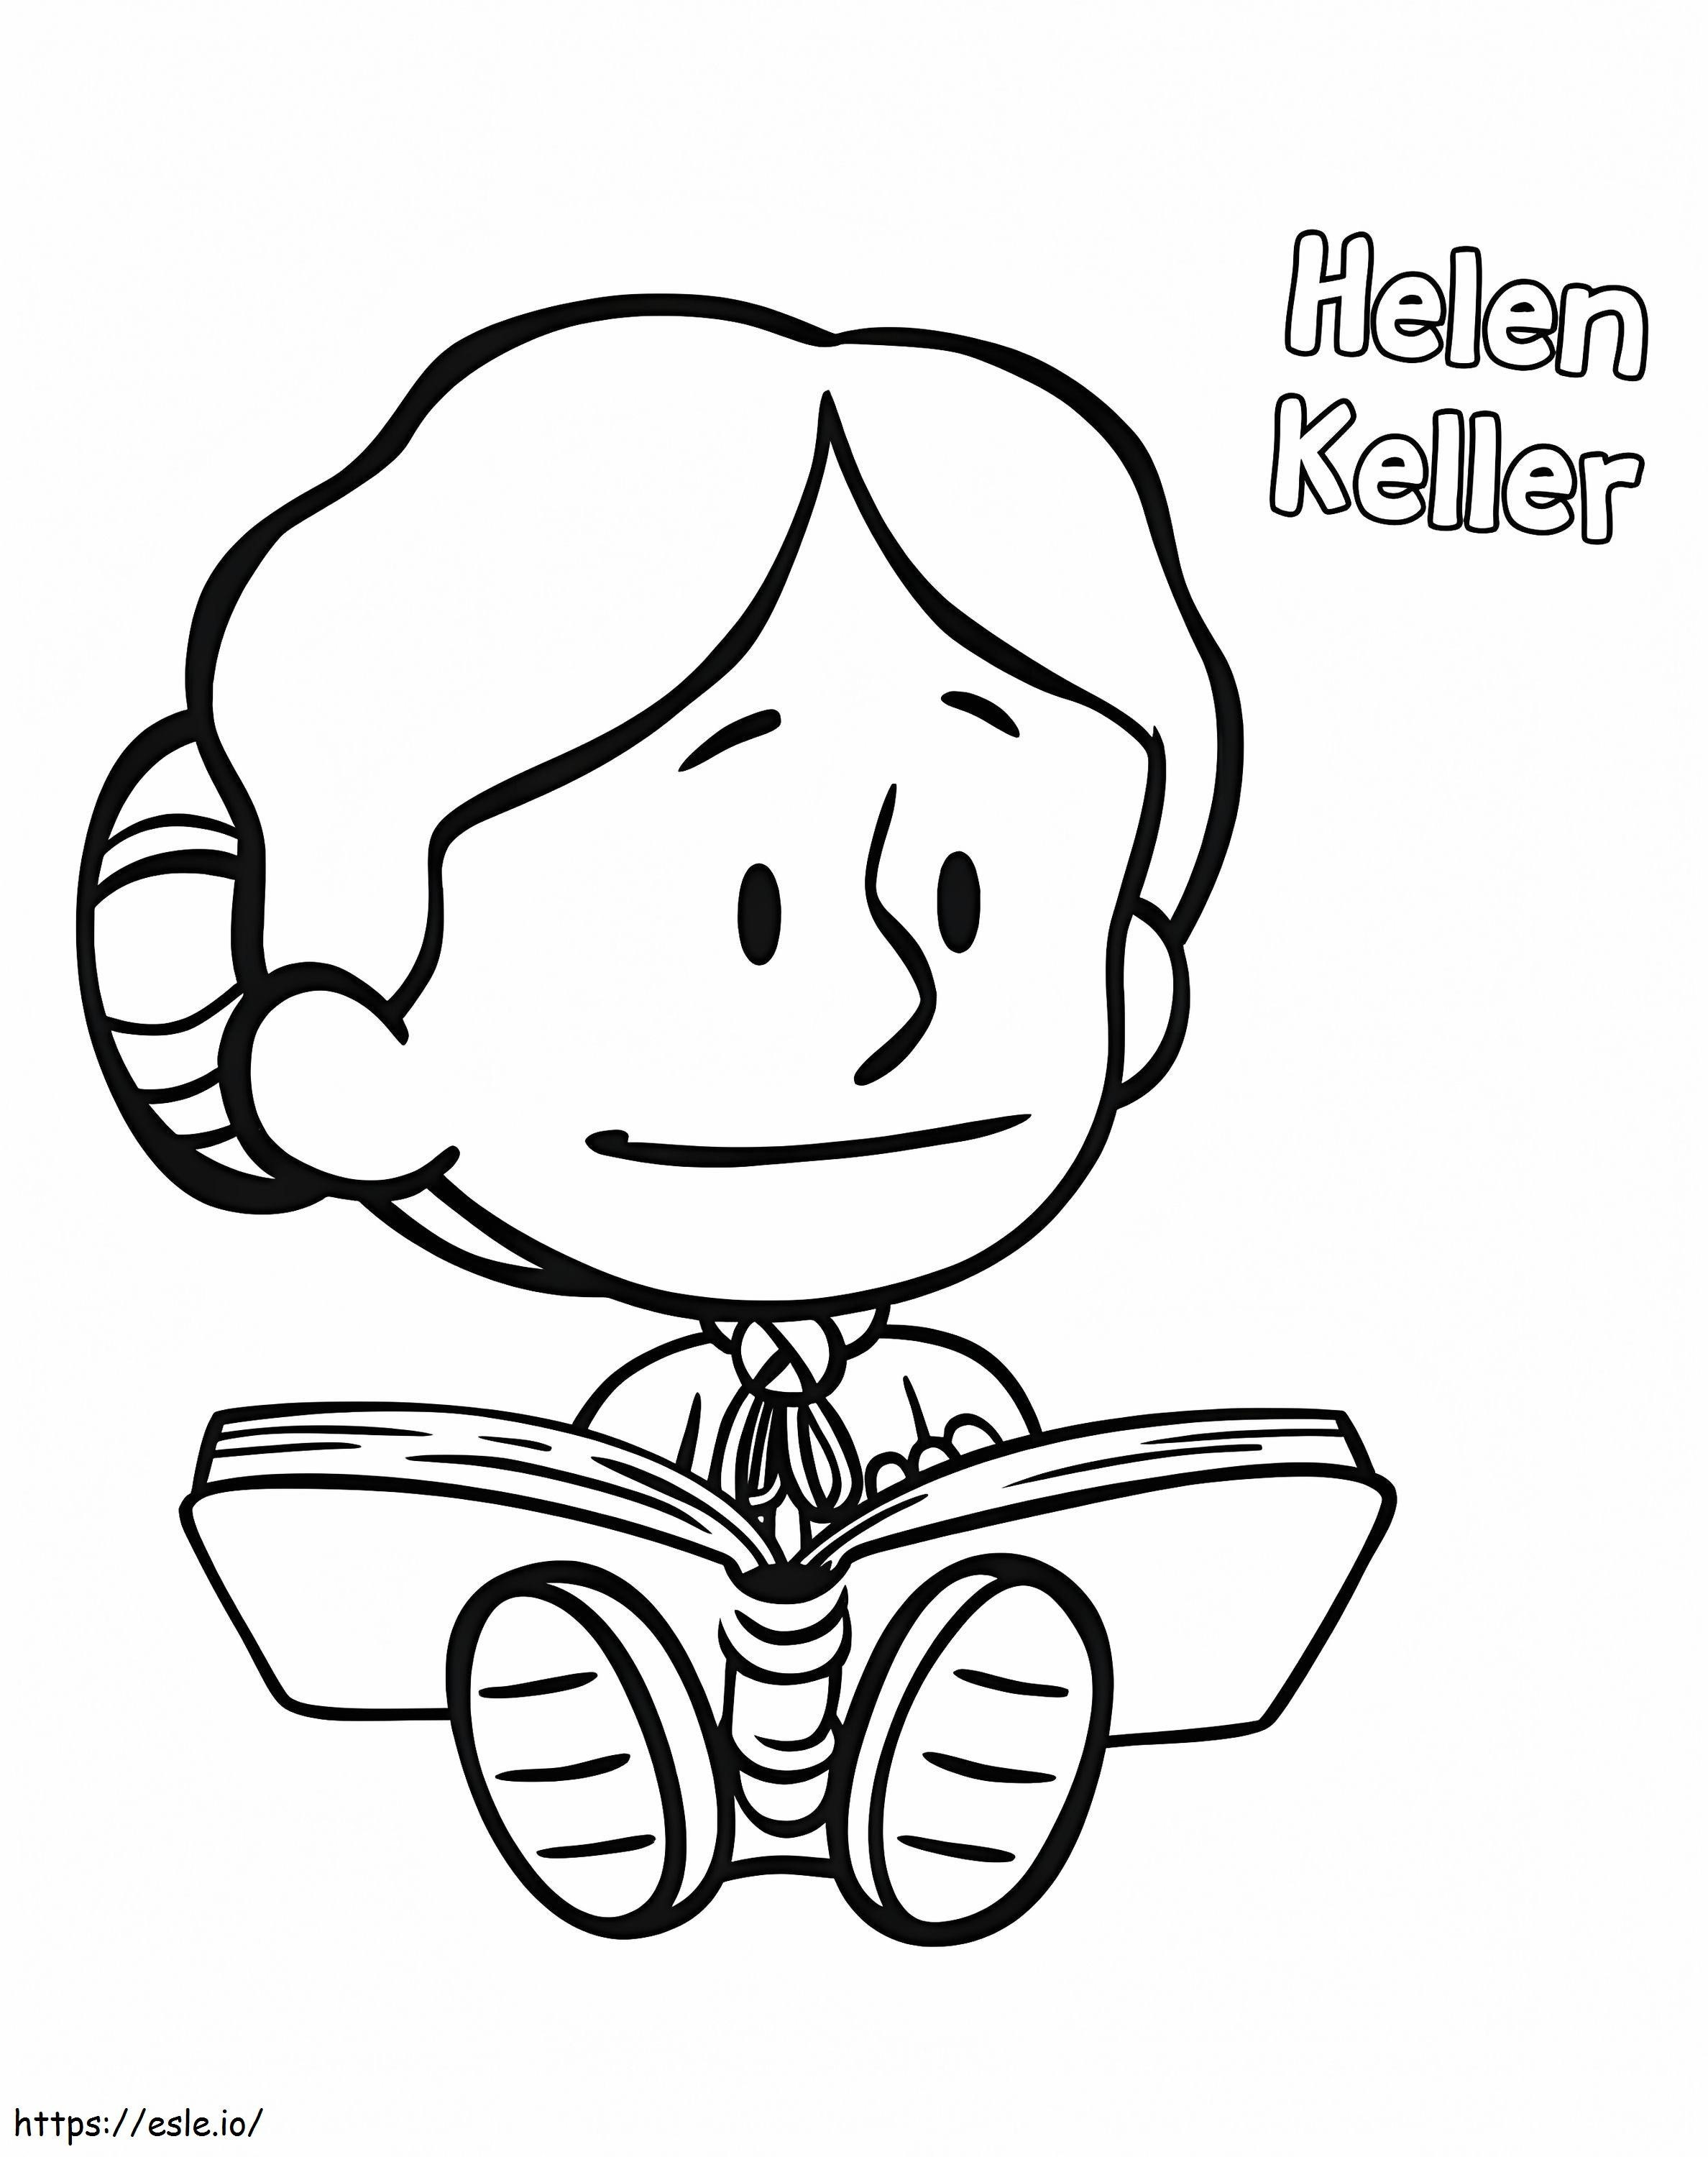 Chibi Helen Keller de colorat